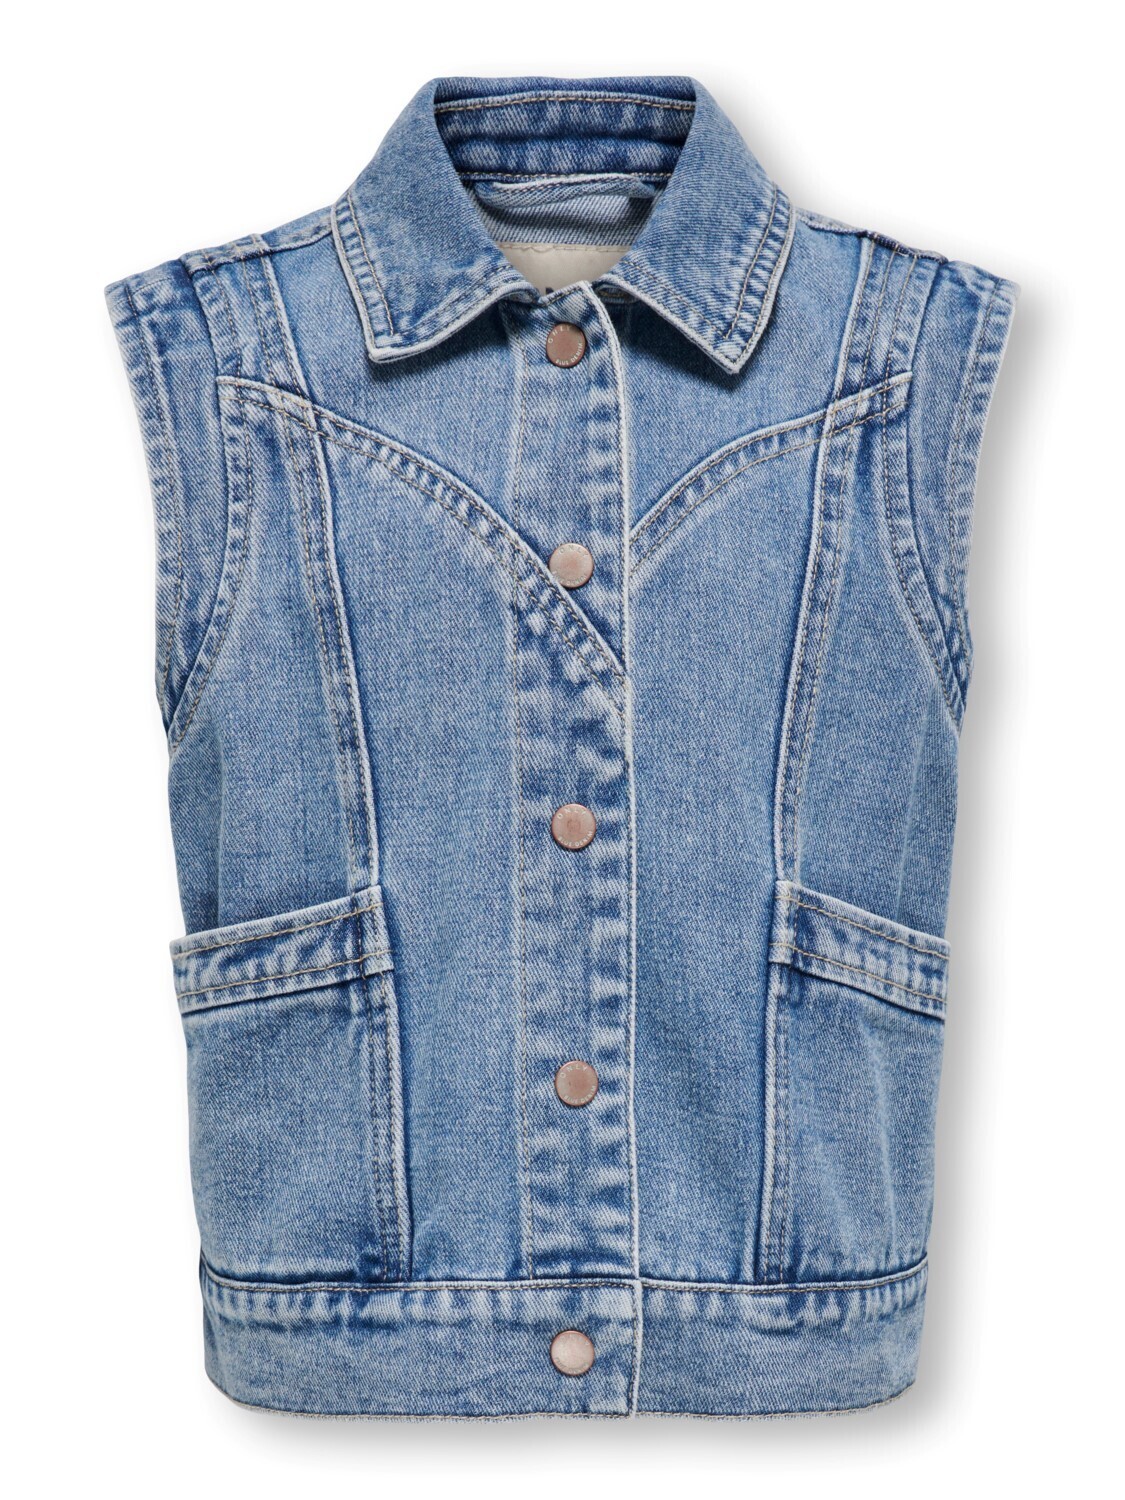 KIDS waistcoat - KENNEDY - medium blue denim